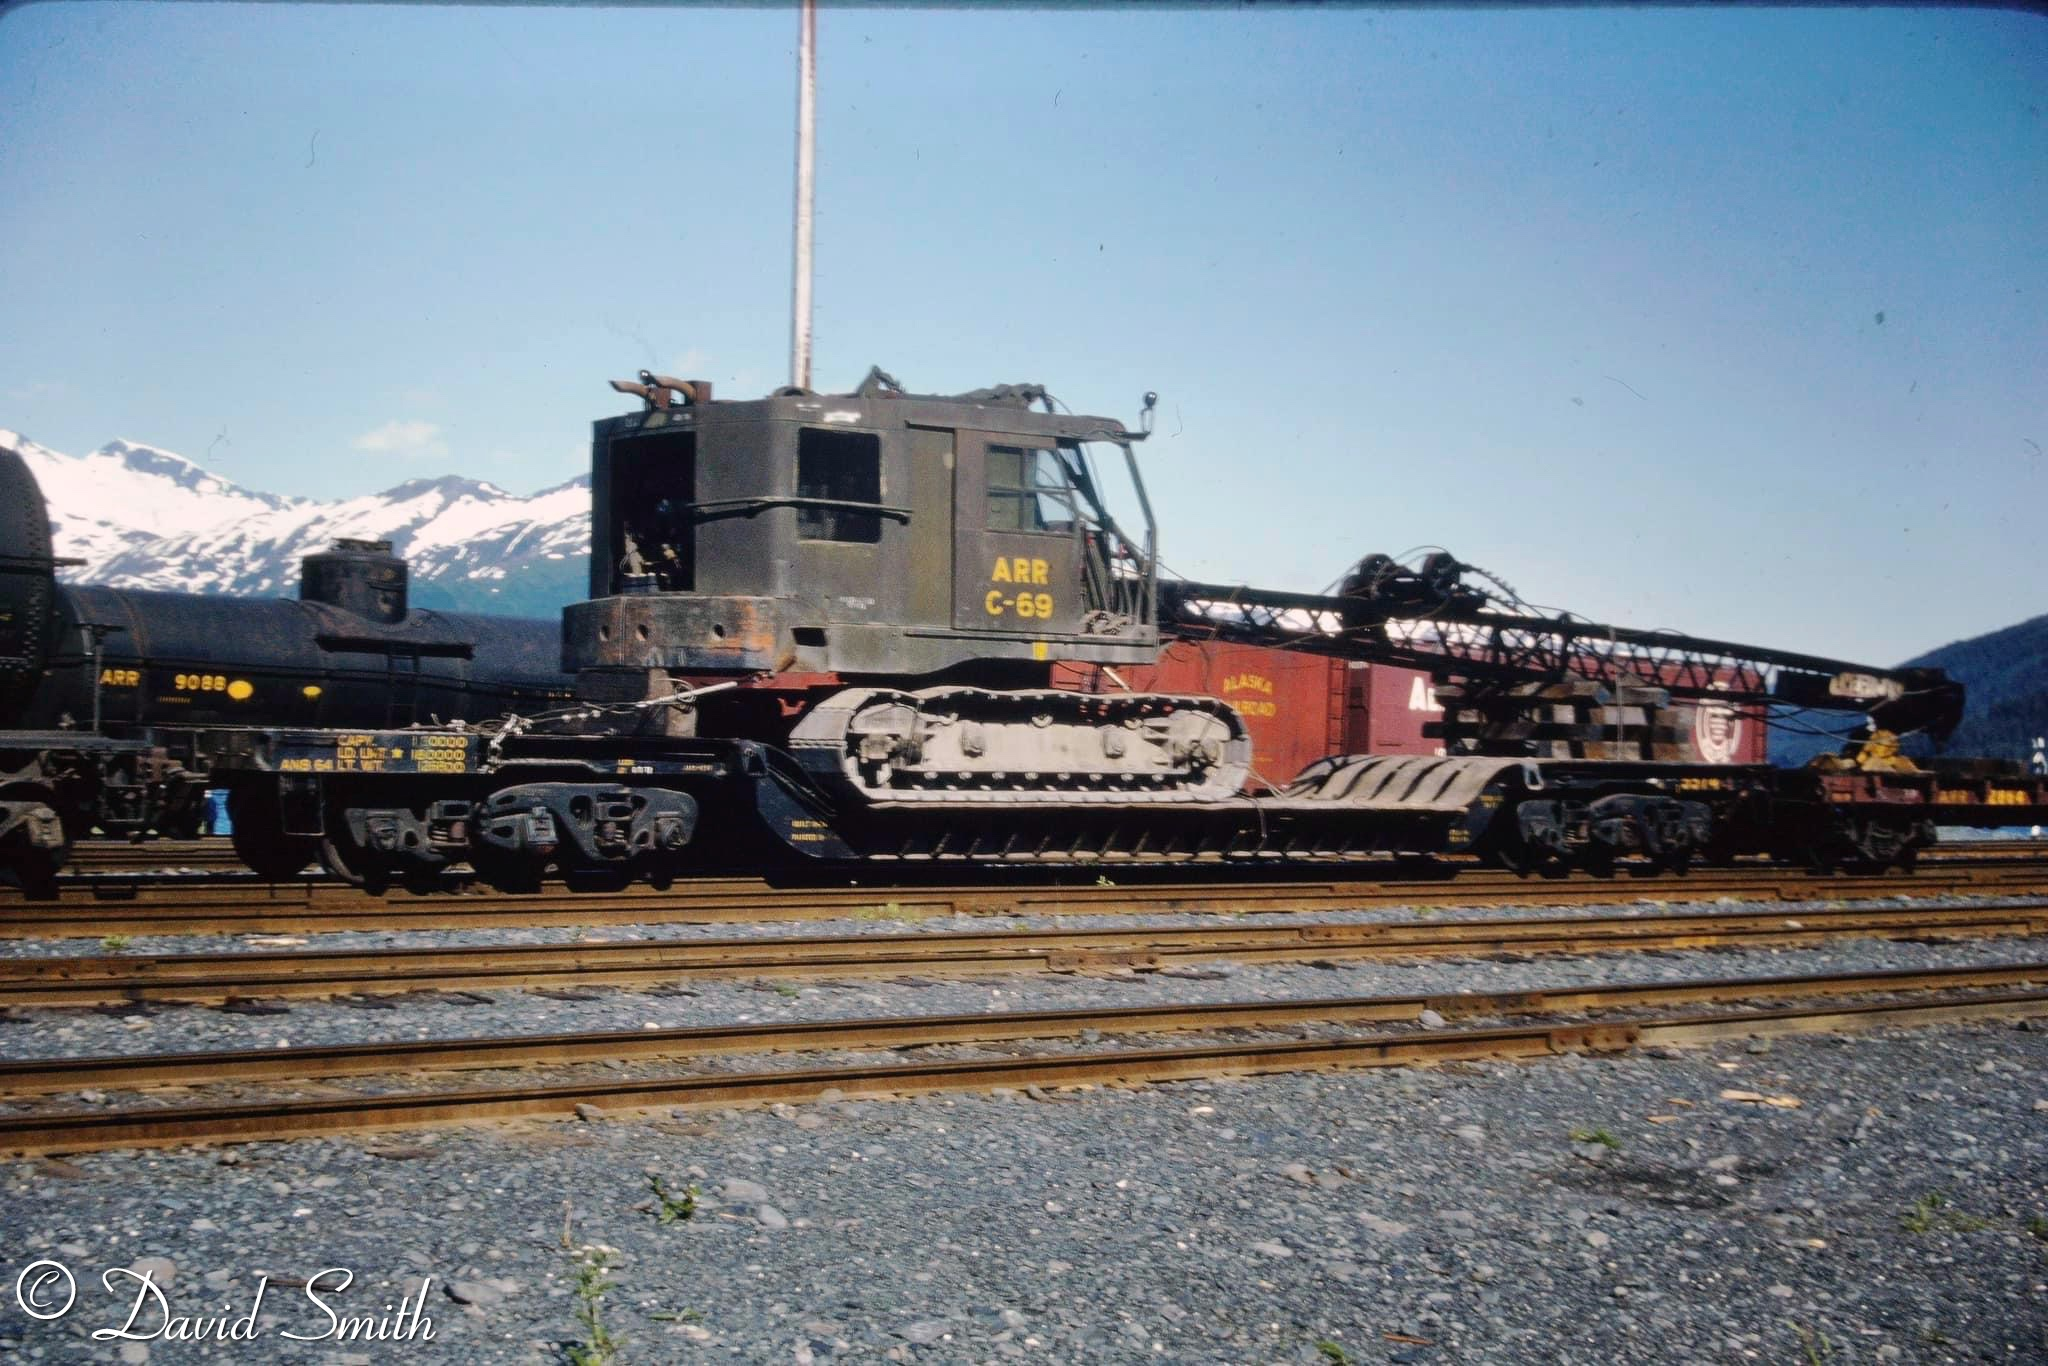 Depressed Center Flat 5574, a 63'4" FD, loaded with American crane C-69. Whittier, Alaska 8/9/75. 